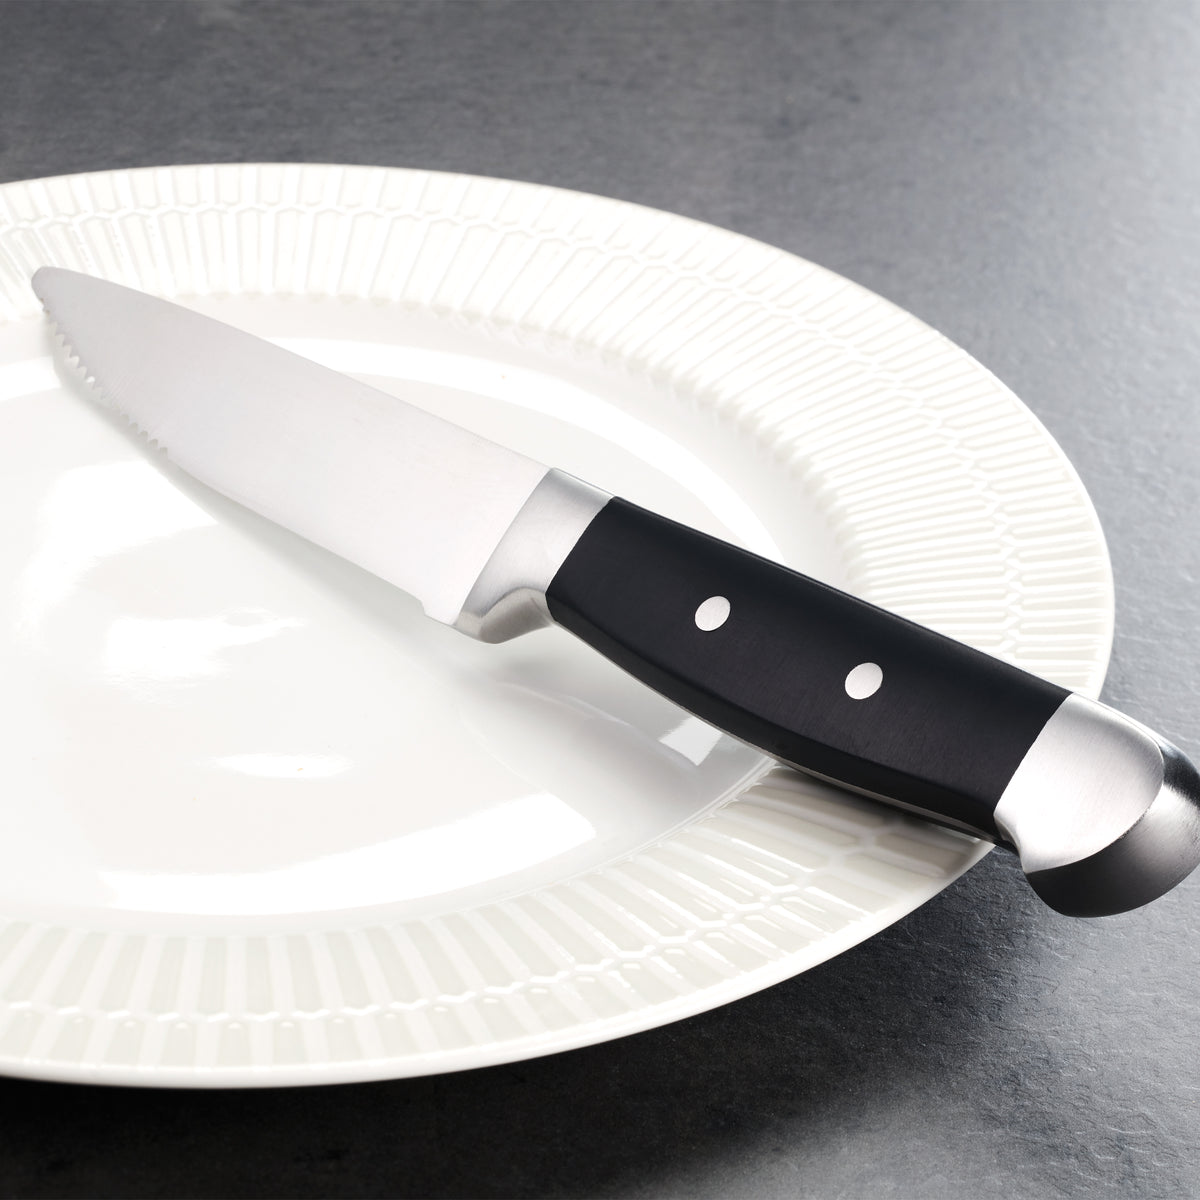 Oneida Moda 4-Pc. Steak Knife Set